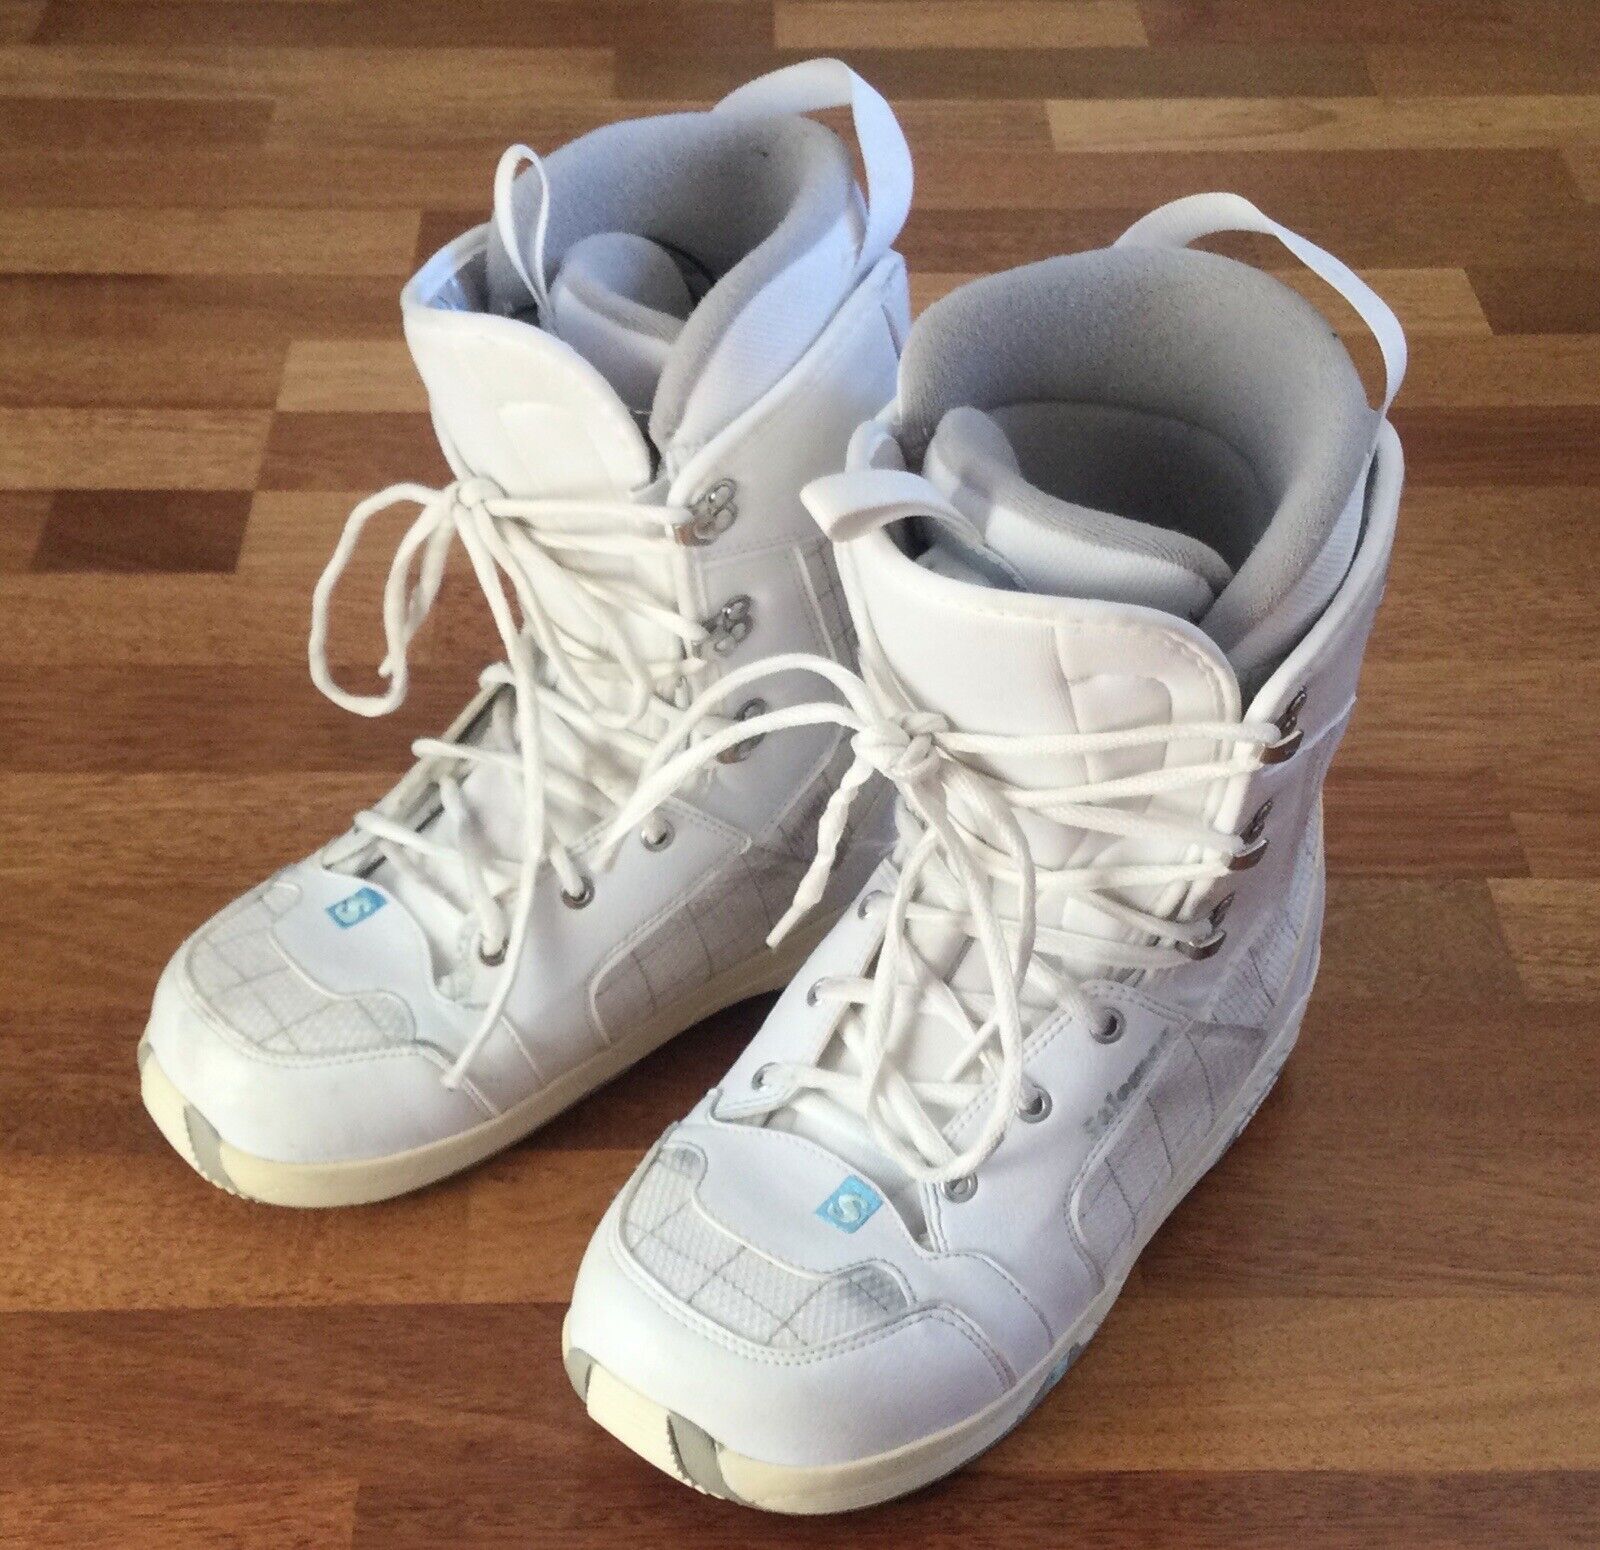 Salomon LINEA Snowboard Boots Woman Size 9 White